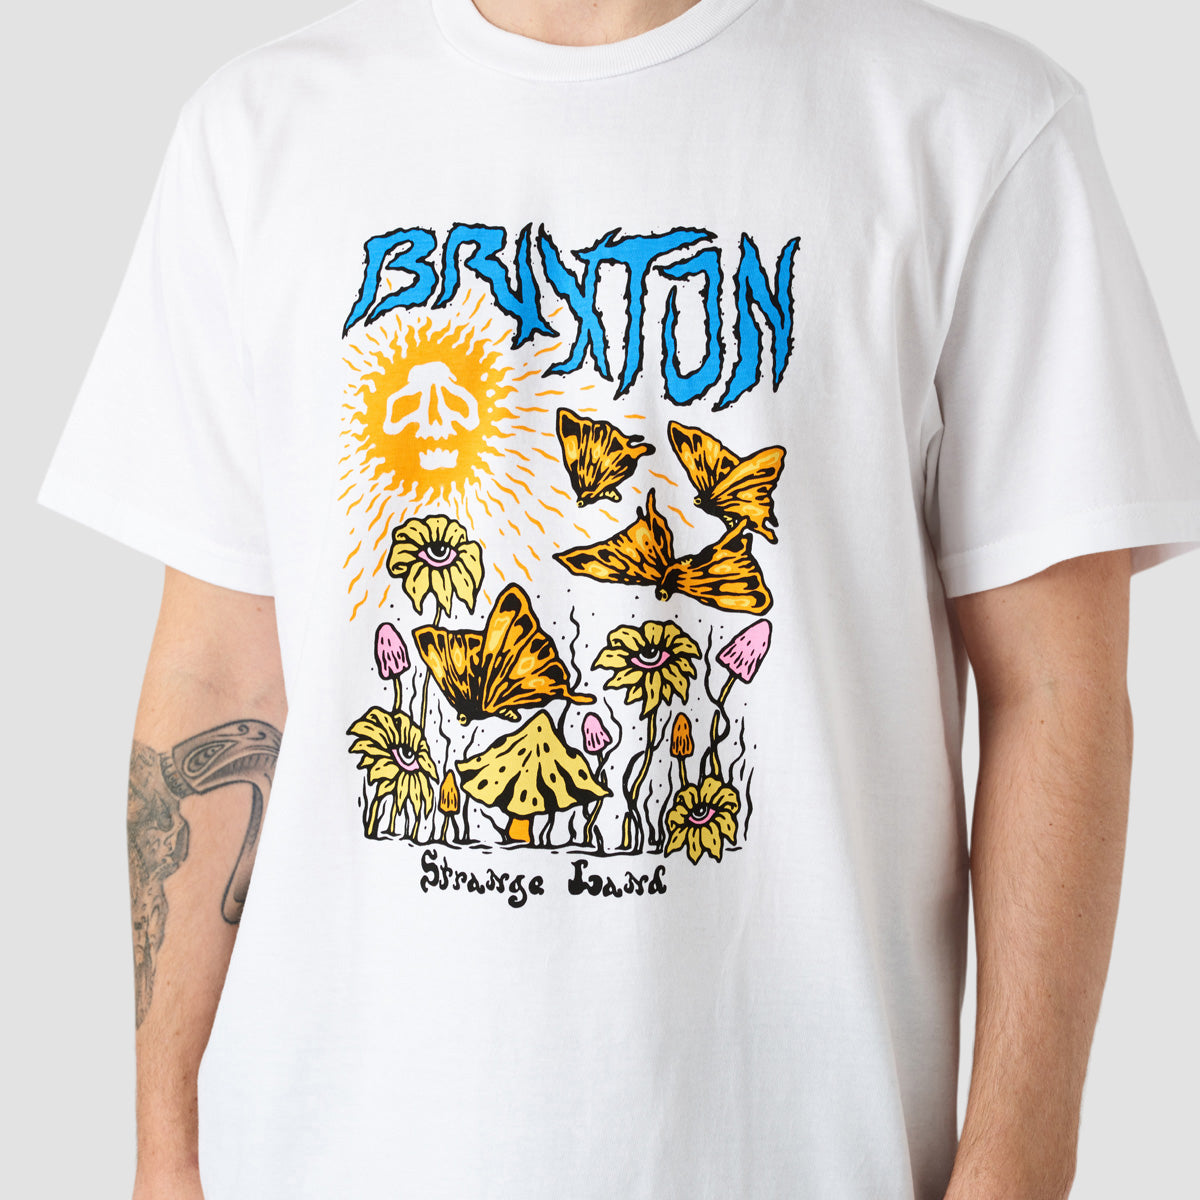 Brixton Strange Land T-Shirt White